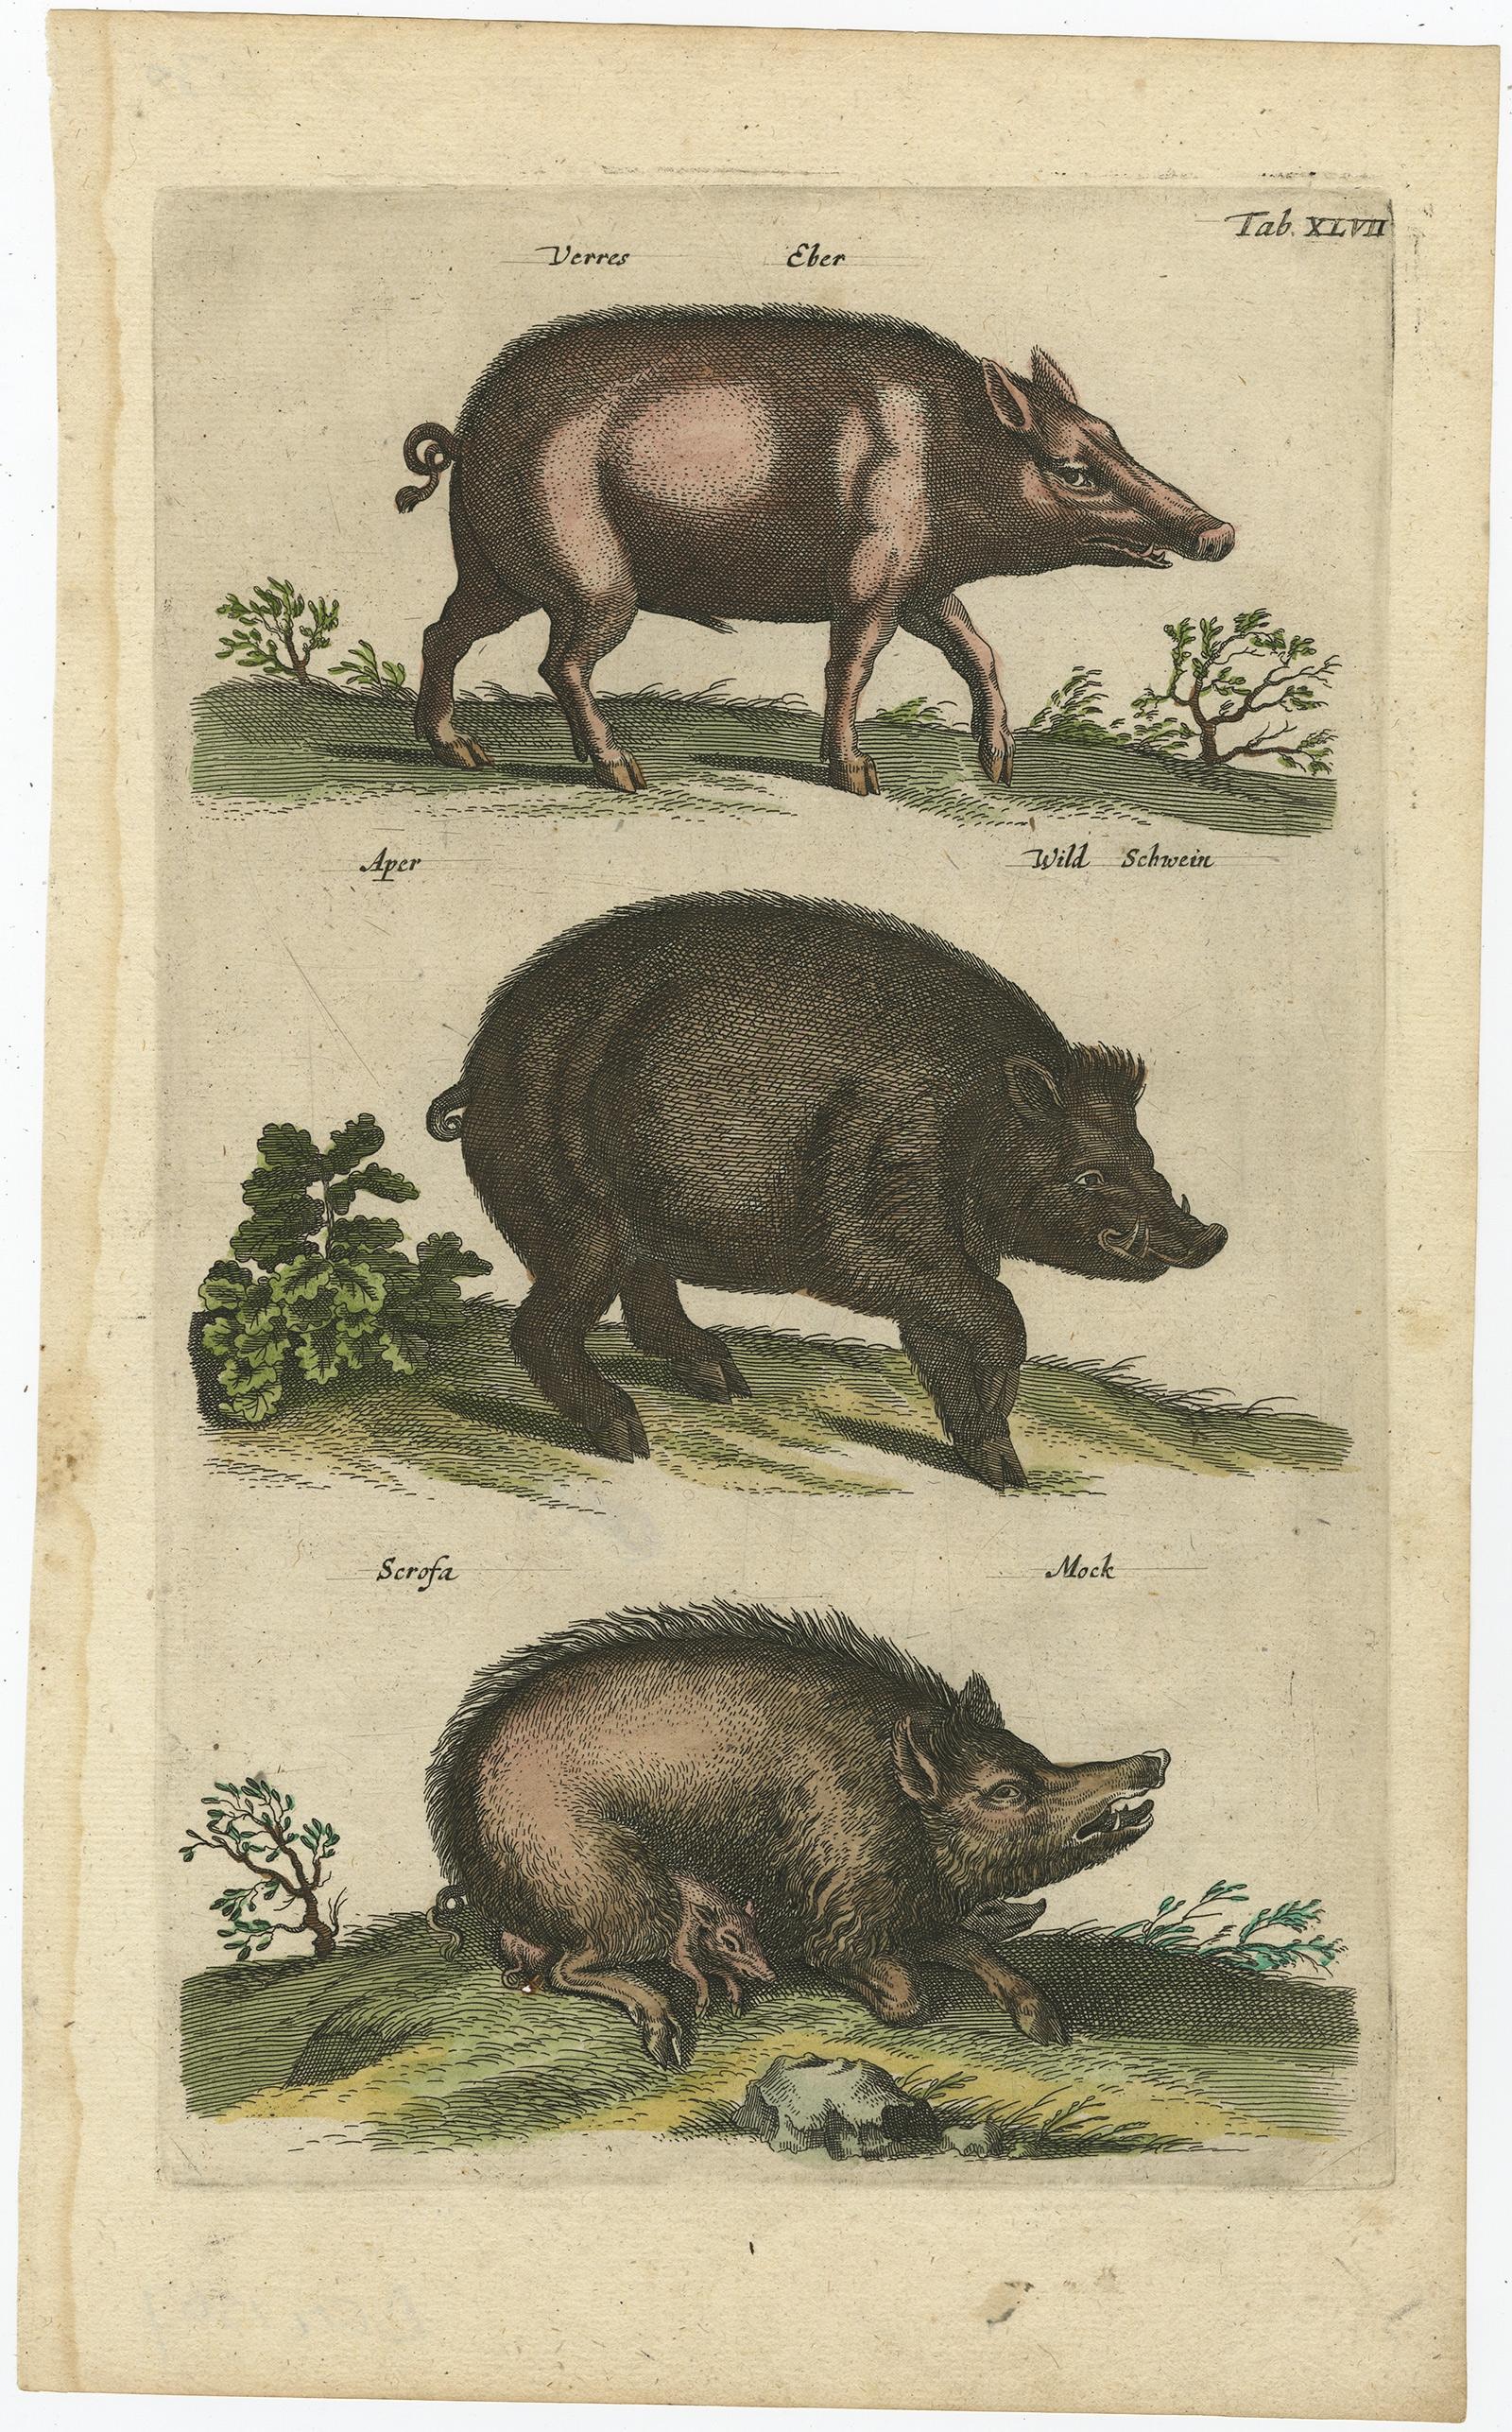 Antique print of wild boars or wild pigs; Verres. Eber - Aper. Wild Schwein - Scrofa. Mock. This print originates from 'Historiae Naturalis De Piscibus Et Cetis Libri V' by John Johnston, published by Matthias Merian in 1657.

Artists and